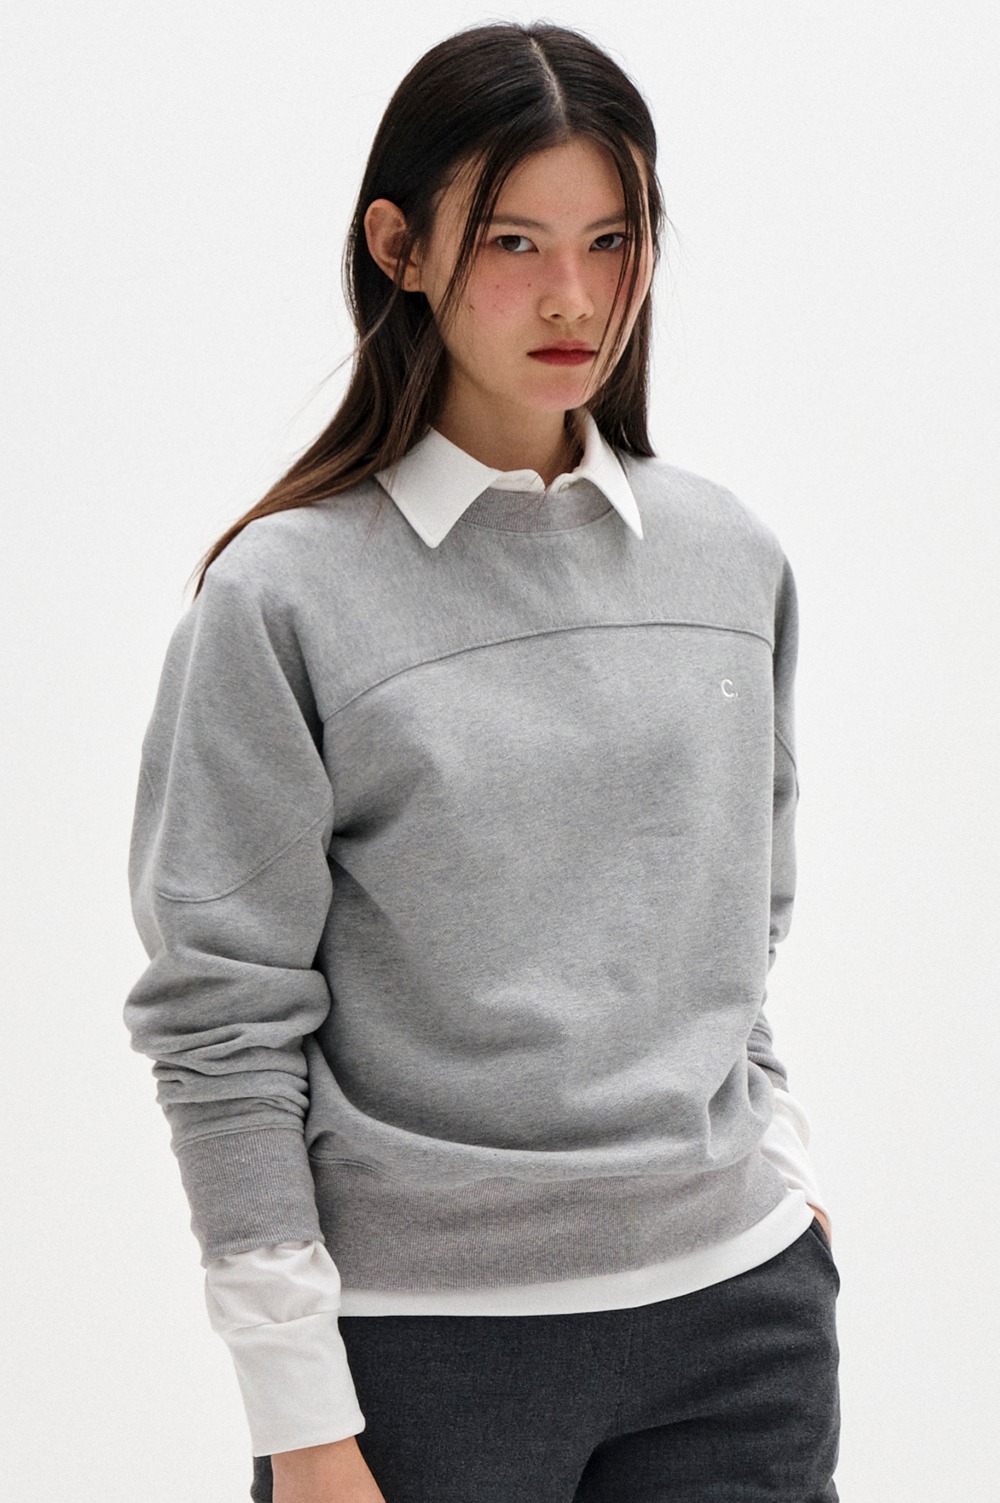 clove - [23FW clove] Point Sweatshirt (Melange Grey)